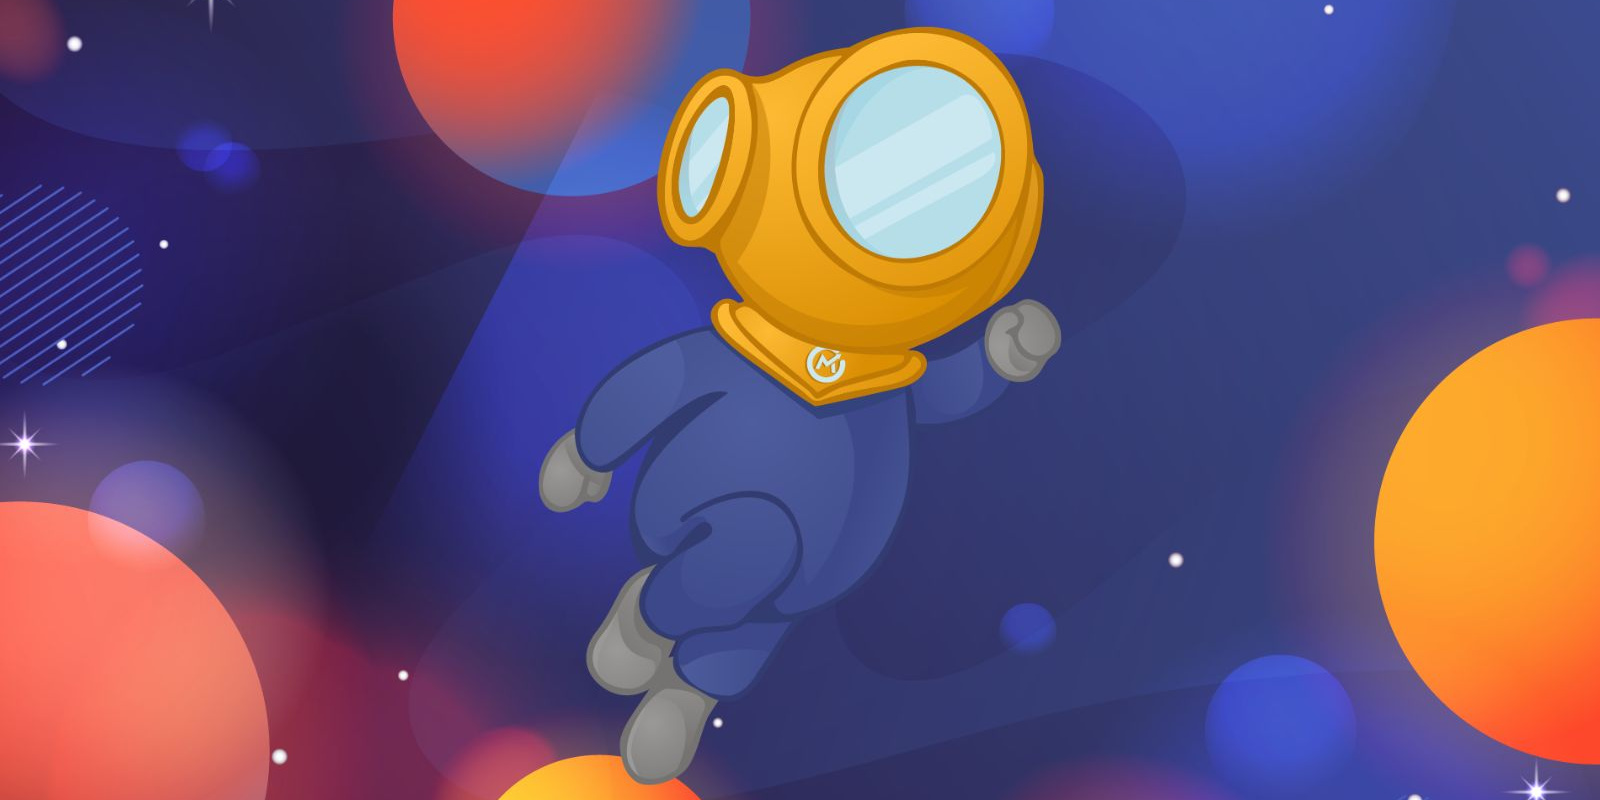 Illustration: Astronaut mascot jumping through planet-like bubbles